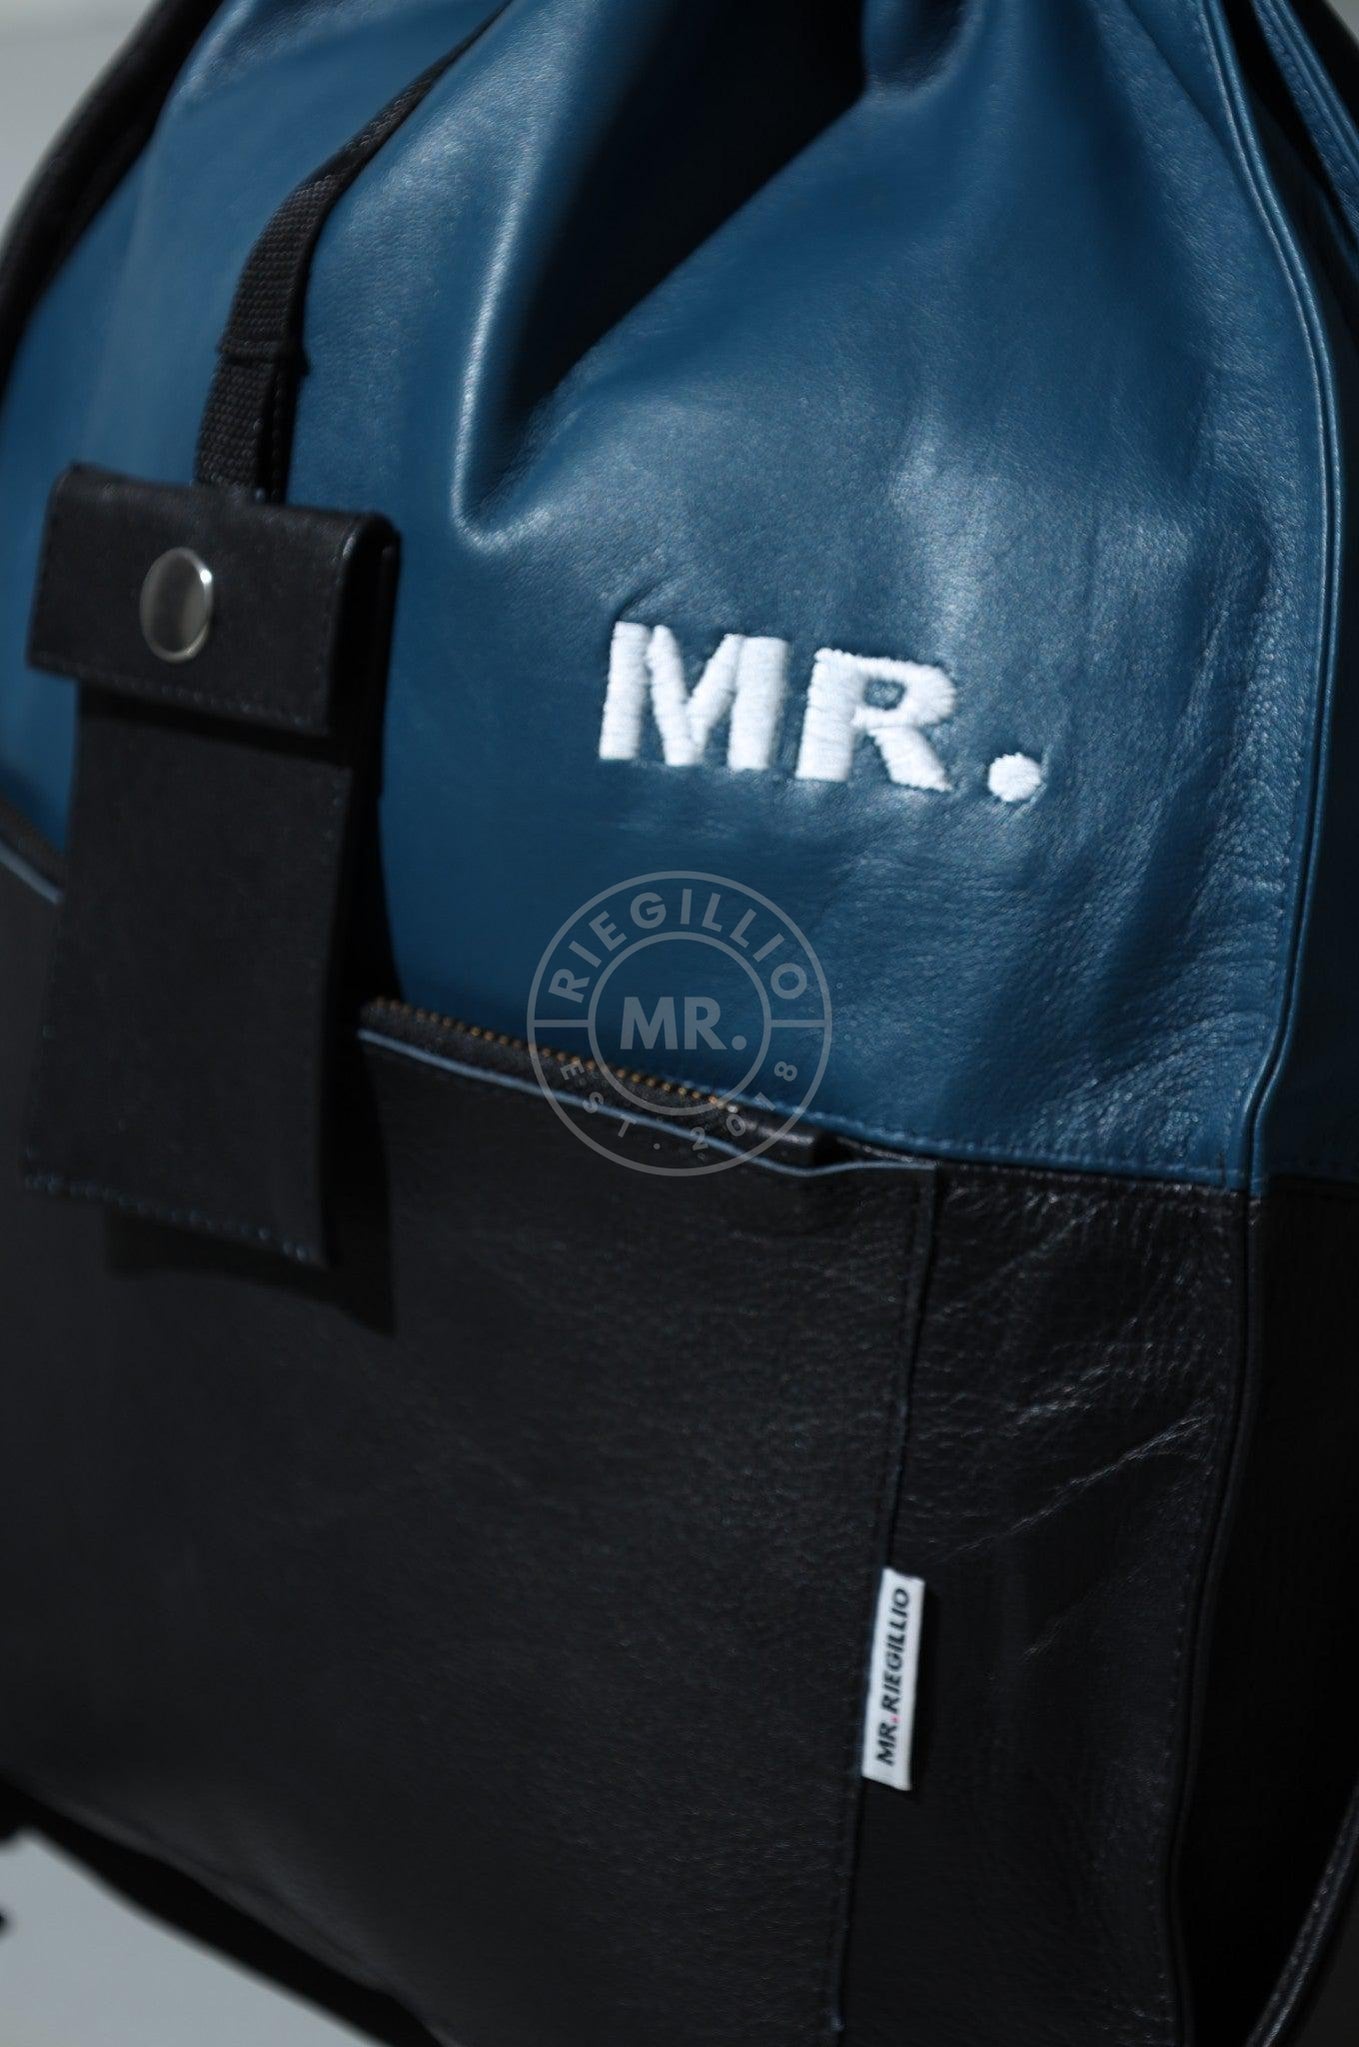 Leather Backpack Black - Blue-at MR. Riegillio